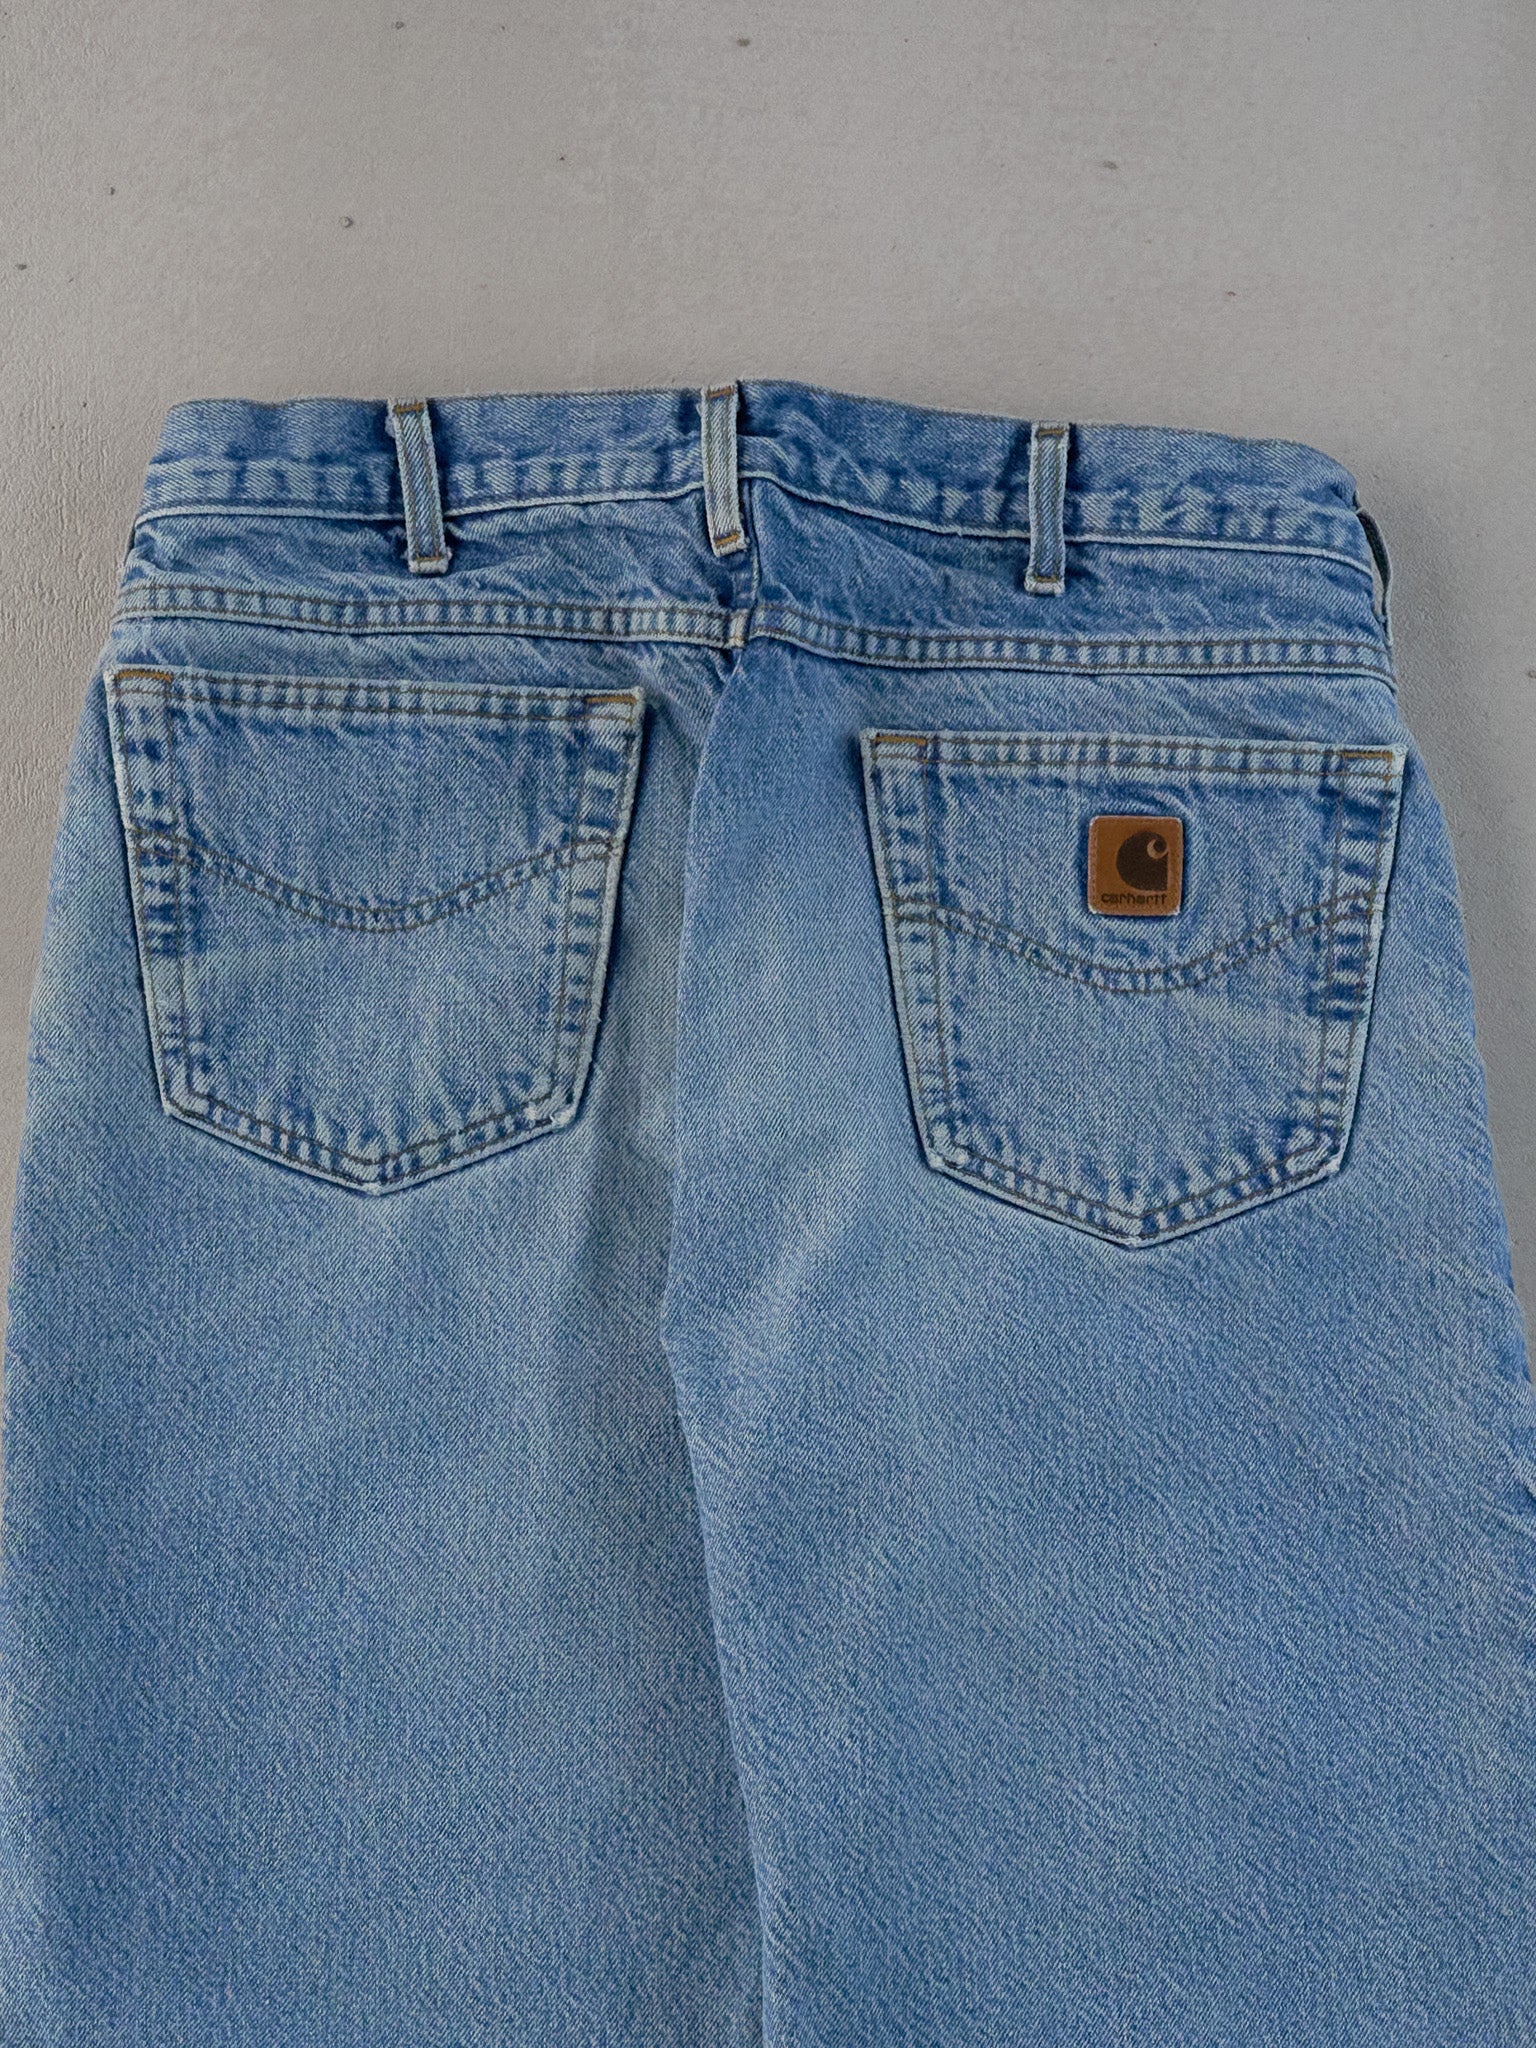 Vintage 90s Light Blue Carhartt Blanket Lined Carpenter Pants (31x29)